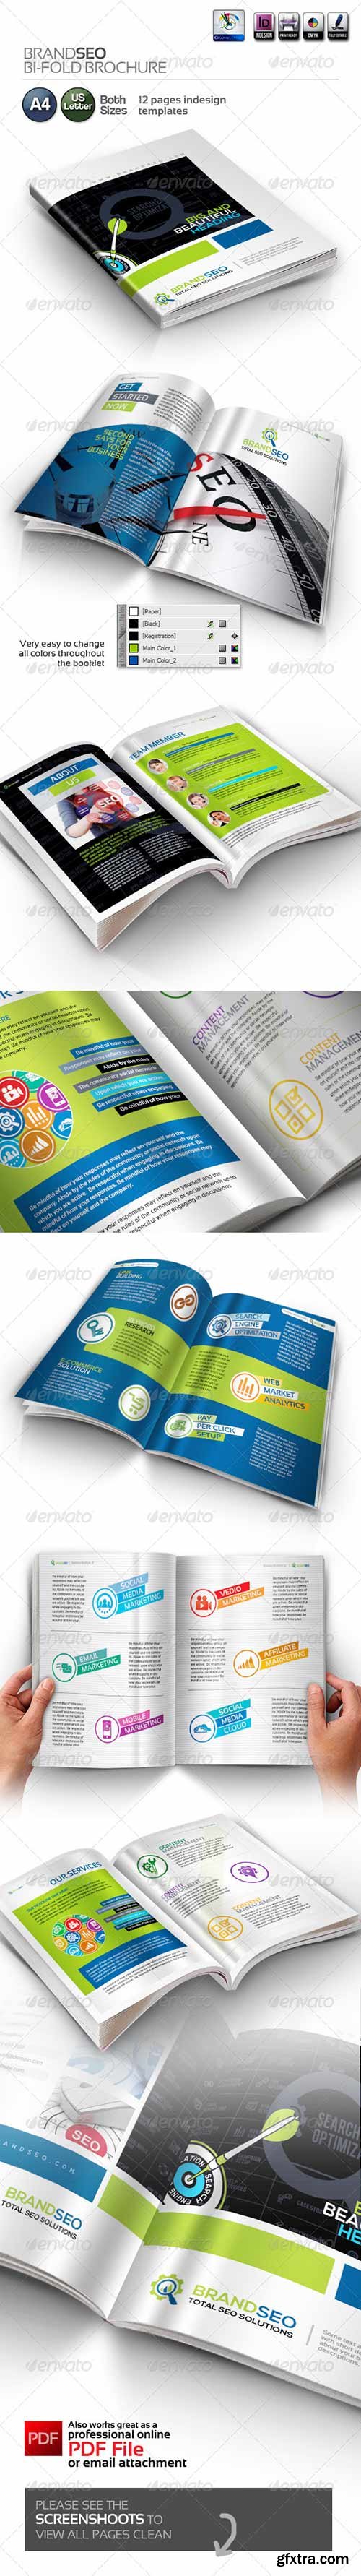 Graphicriver - BrandSEO Bi-fold Creative Brochure 4183802